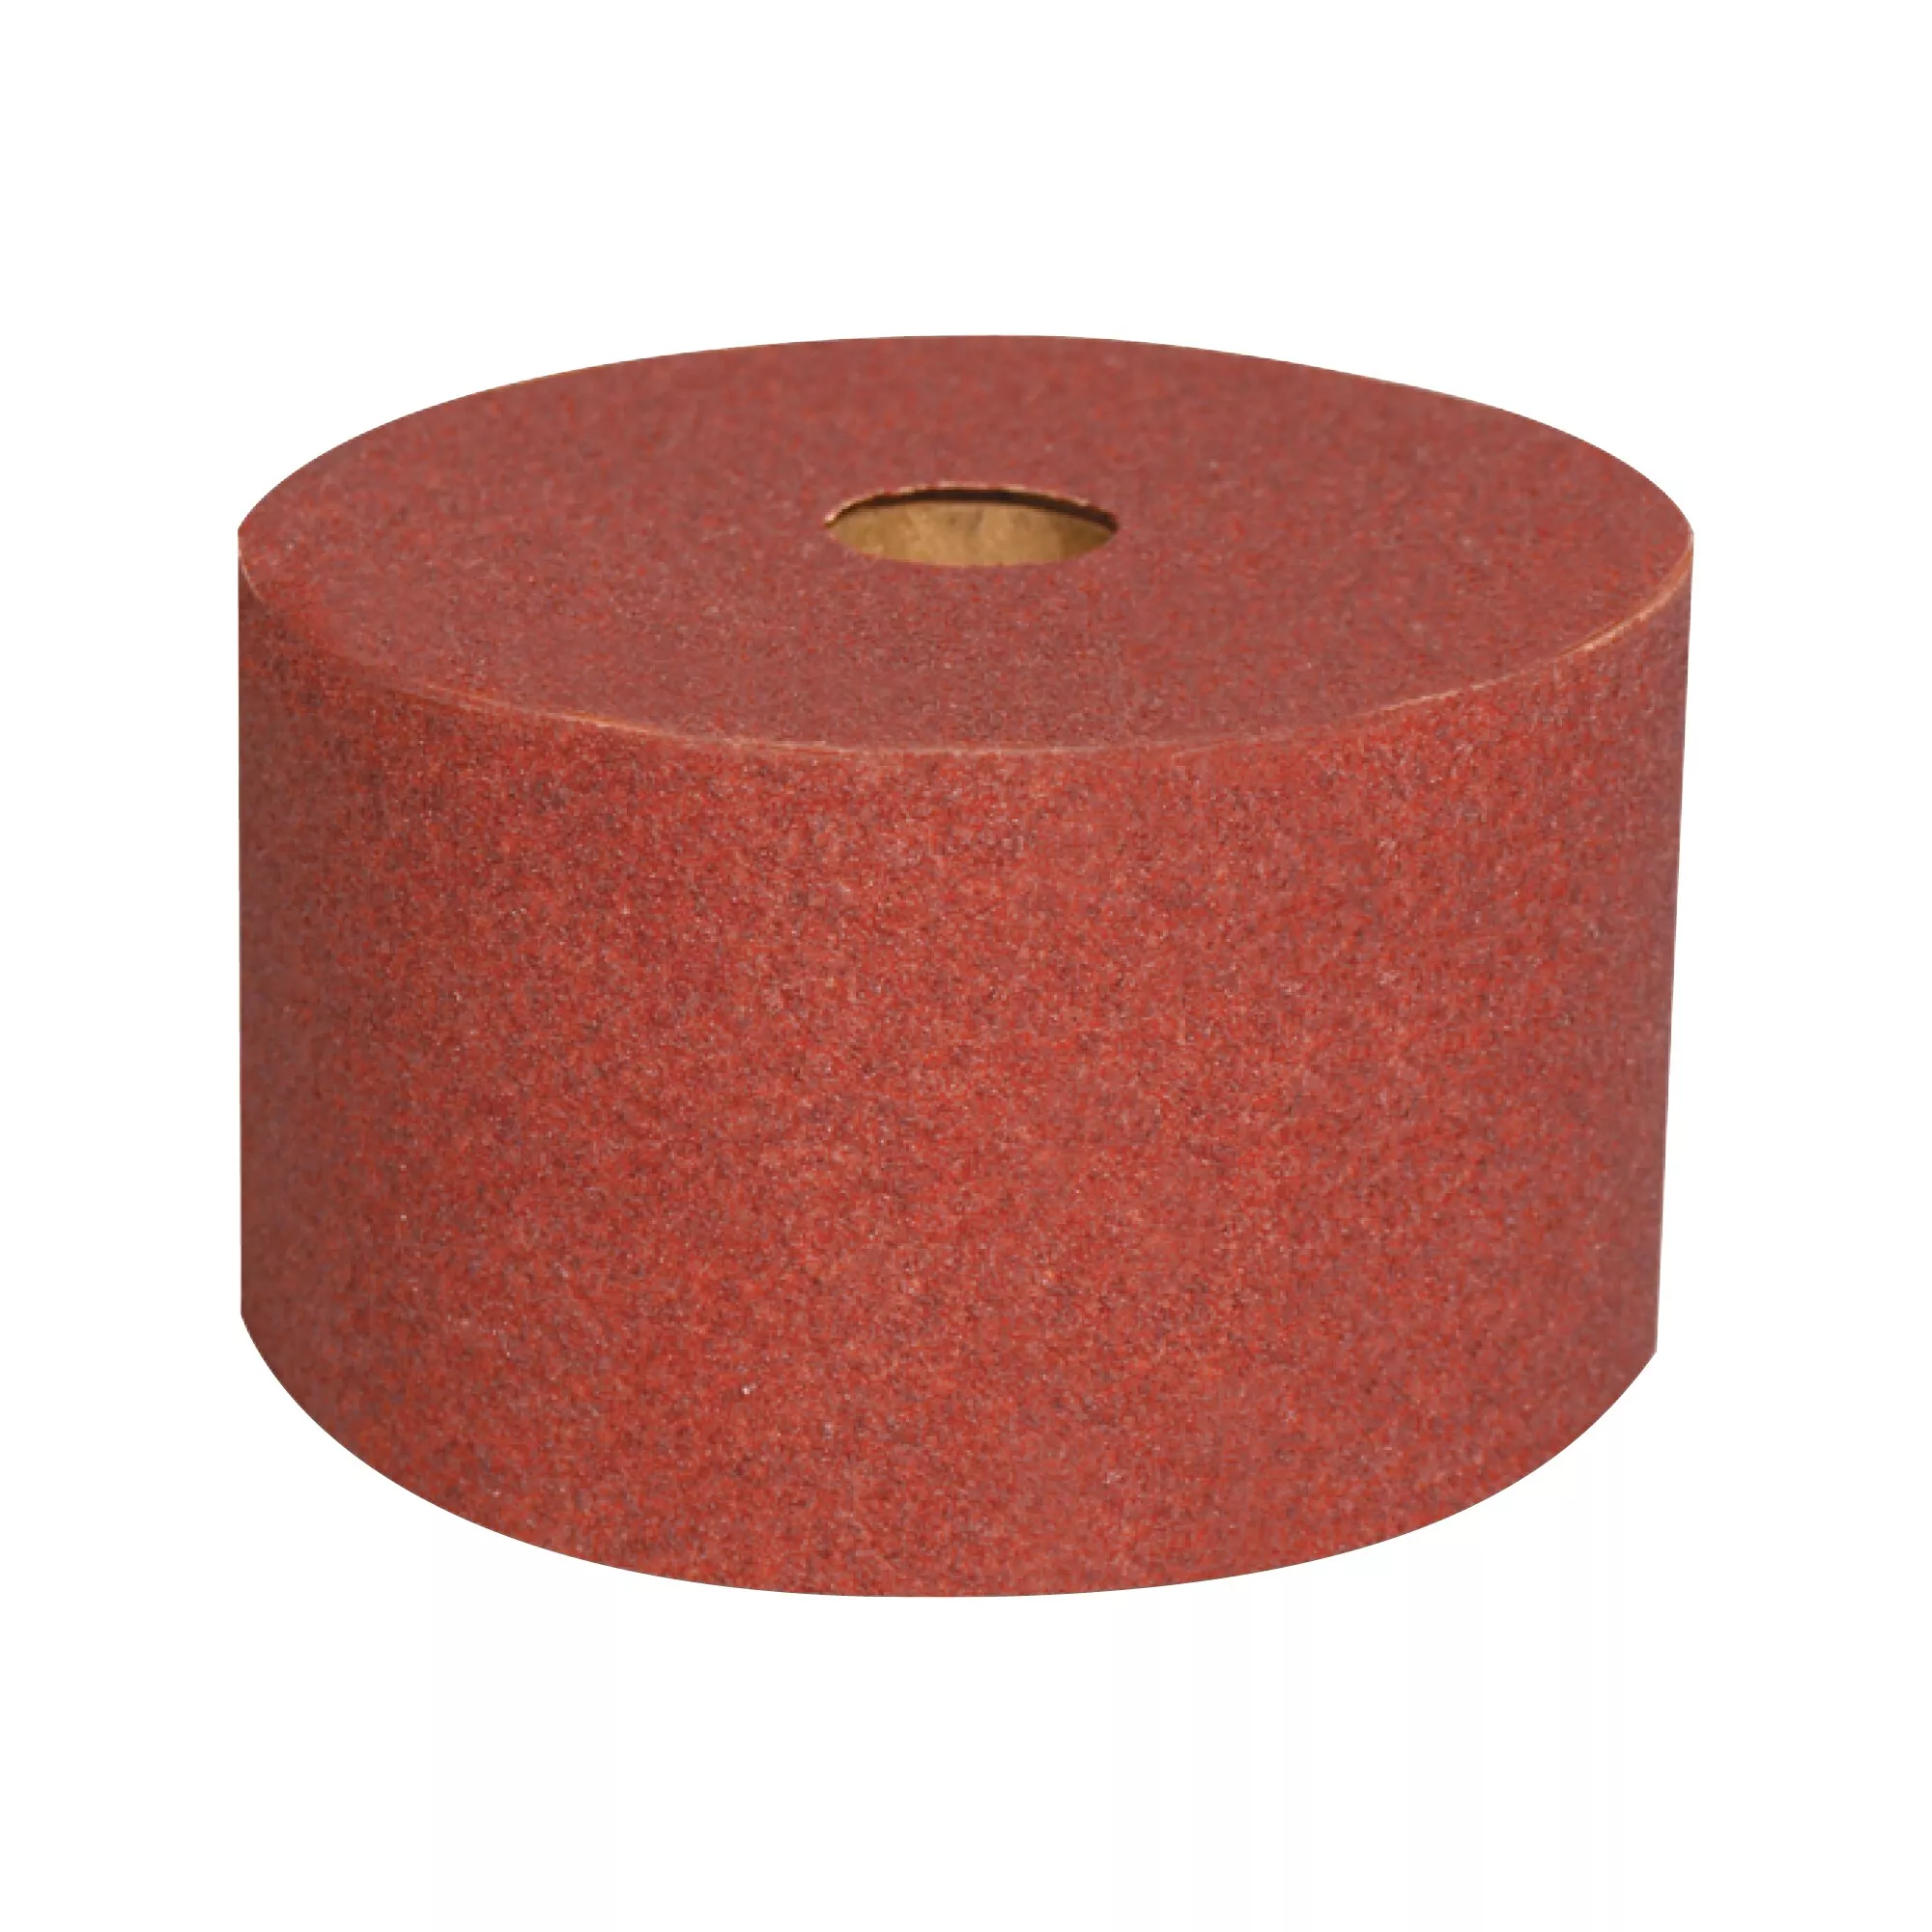 SKU 7000119928 | 3M™ Red Abrasive Stikit™ Sheet Roll